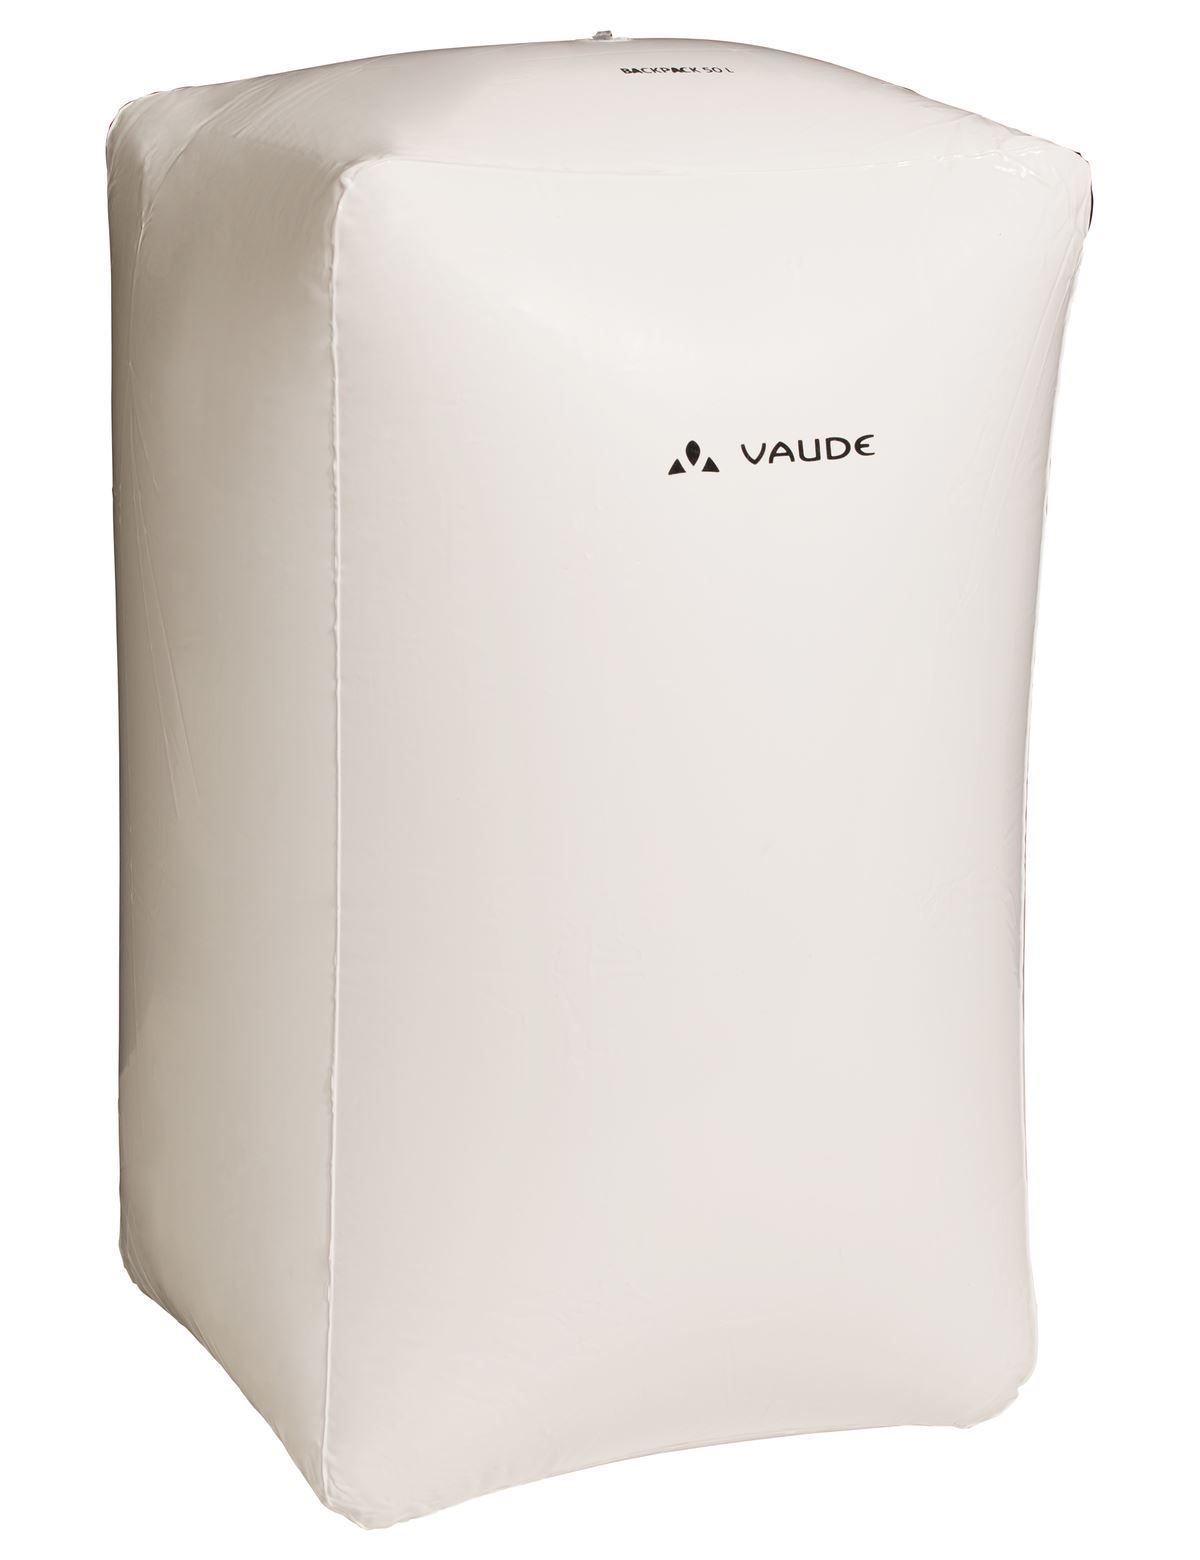 Image of VAUDE: Airbag for backpacks 50l - white - -